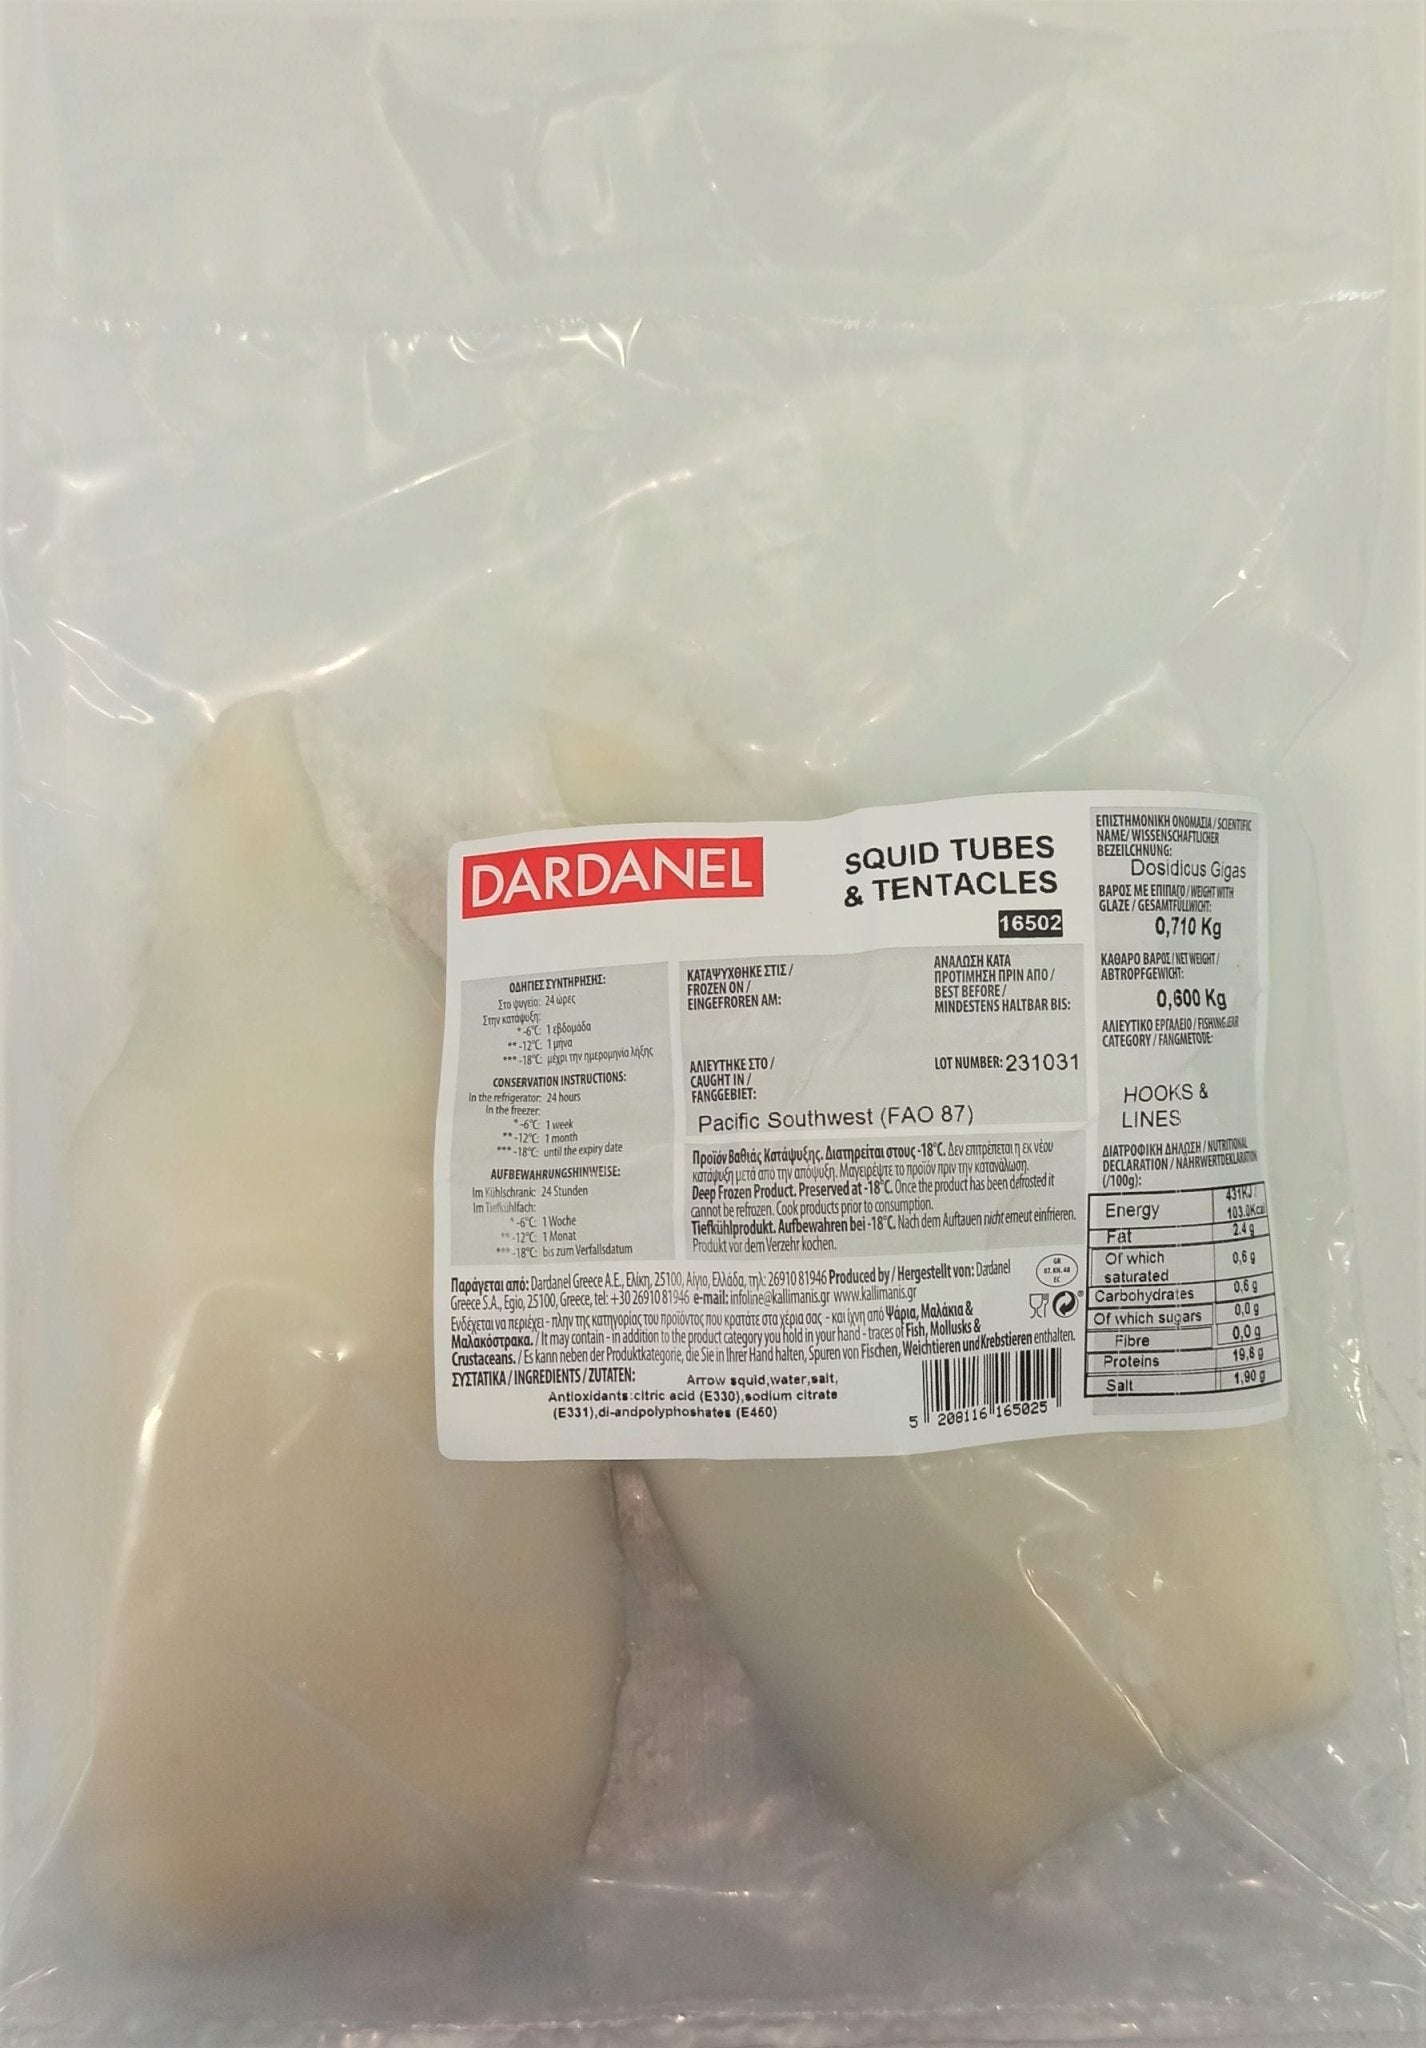 Dardanel Squid Tubes & Tentacles (710G) - Aytac Foods